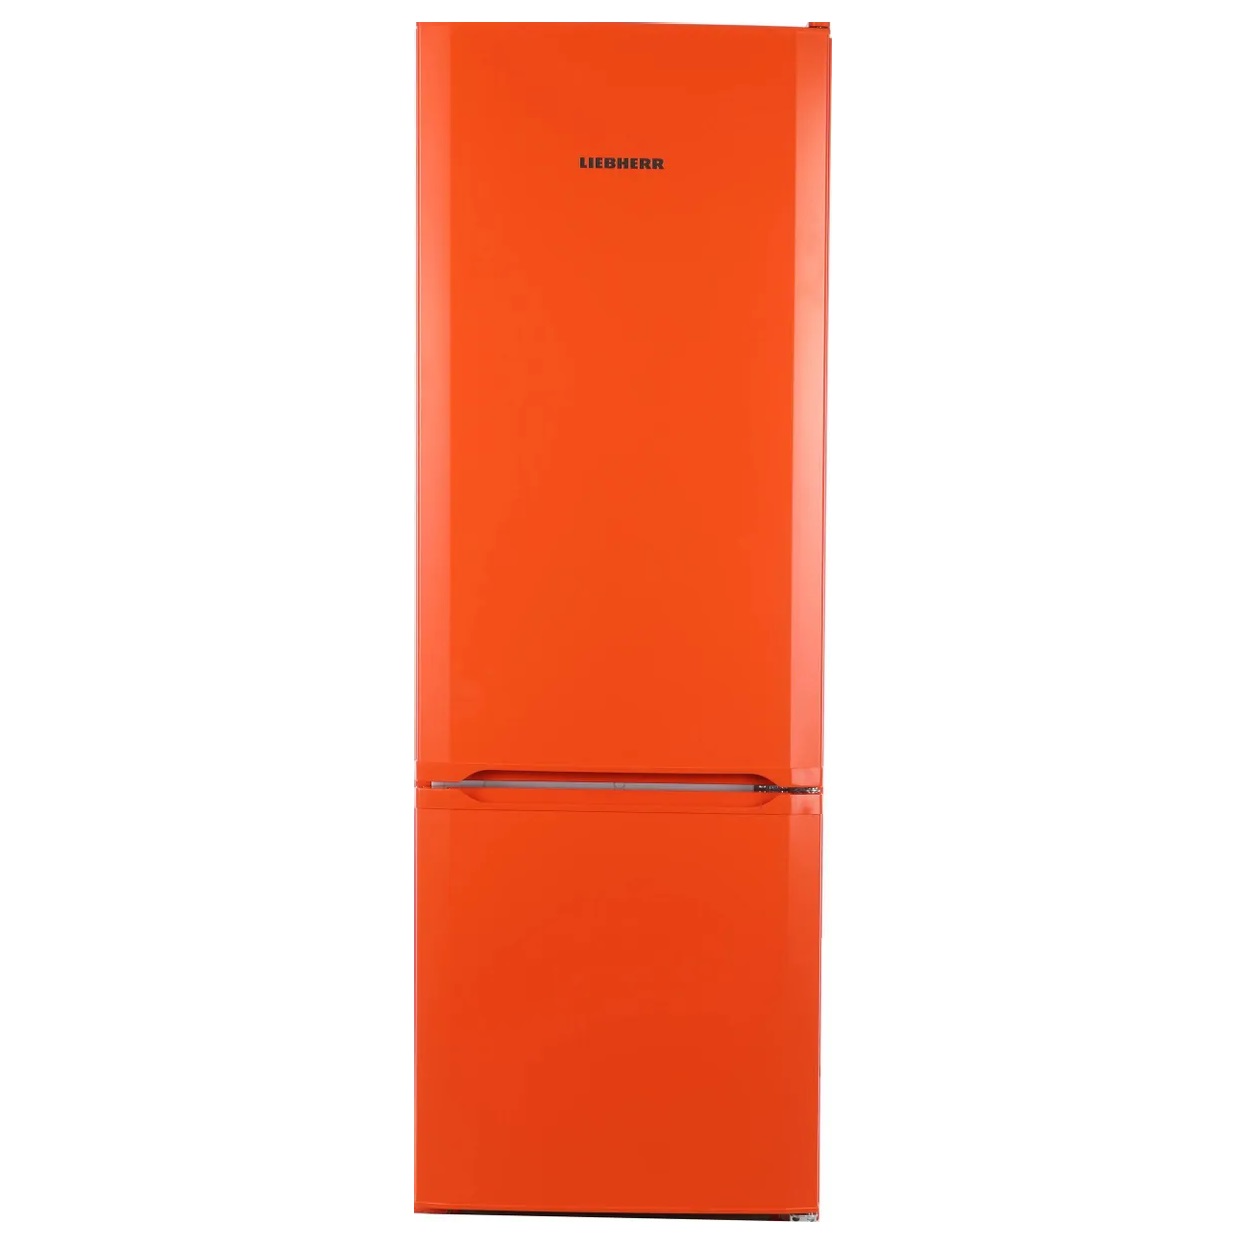 Холодильник LIEBHERR CUNO 2831-22 001 оранжевый холодильник liebherr cukw 2831 20 зеленый